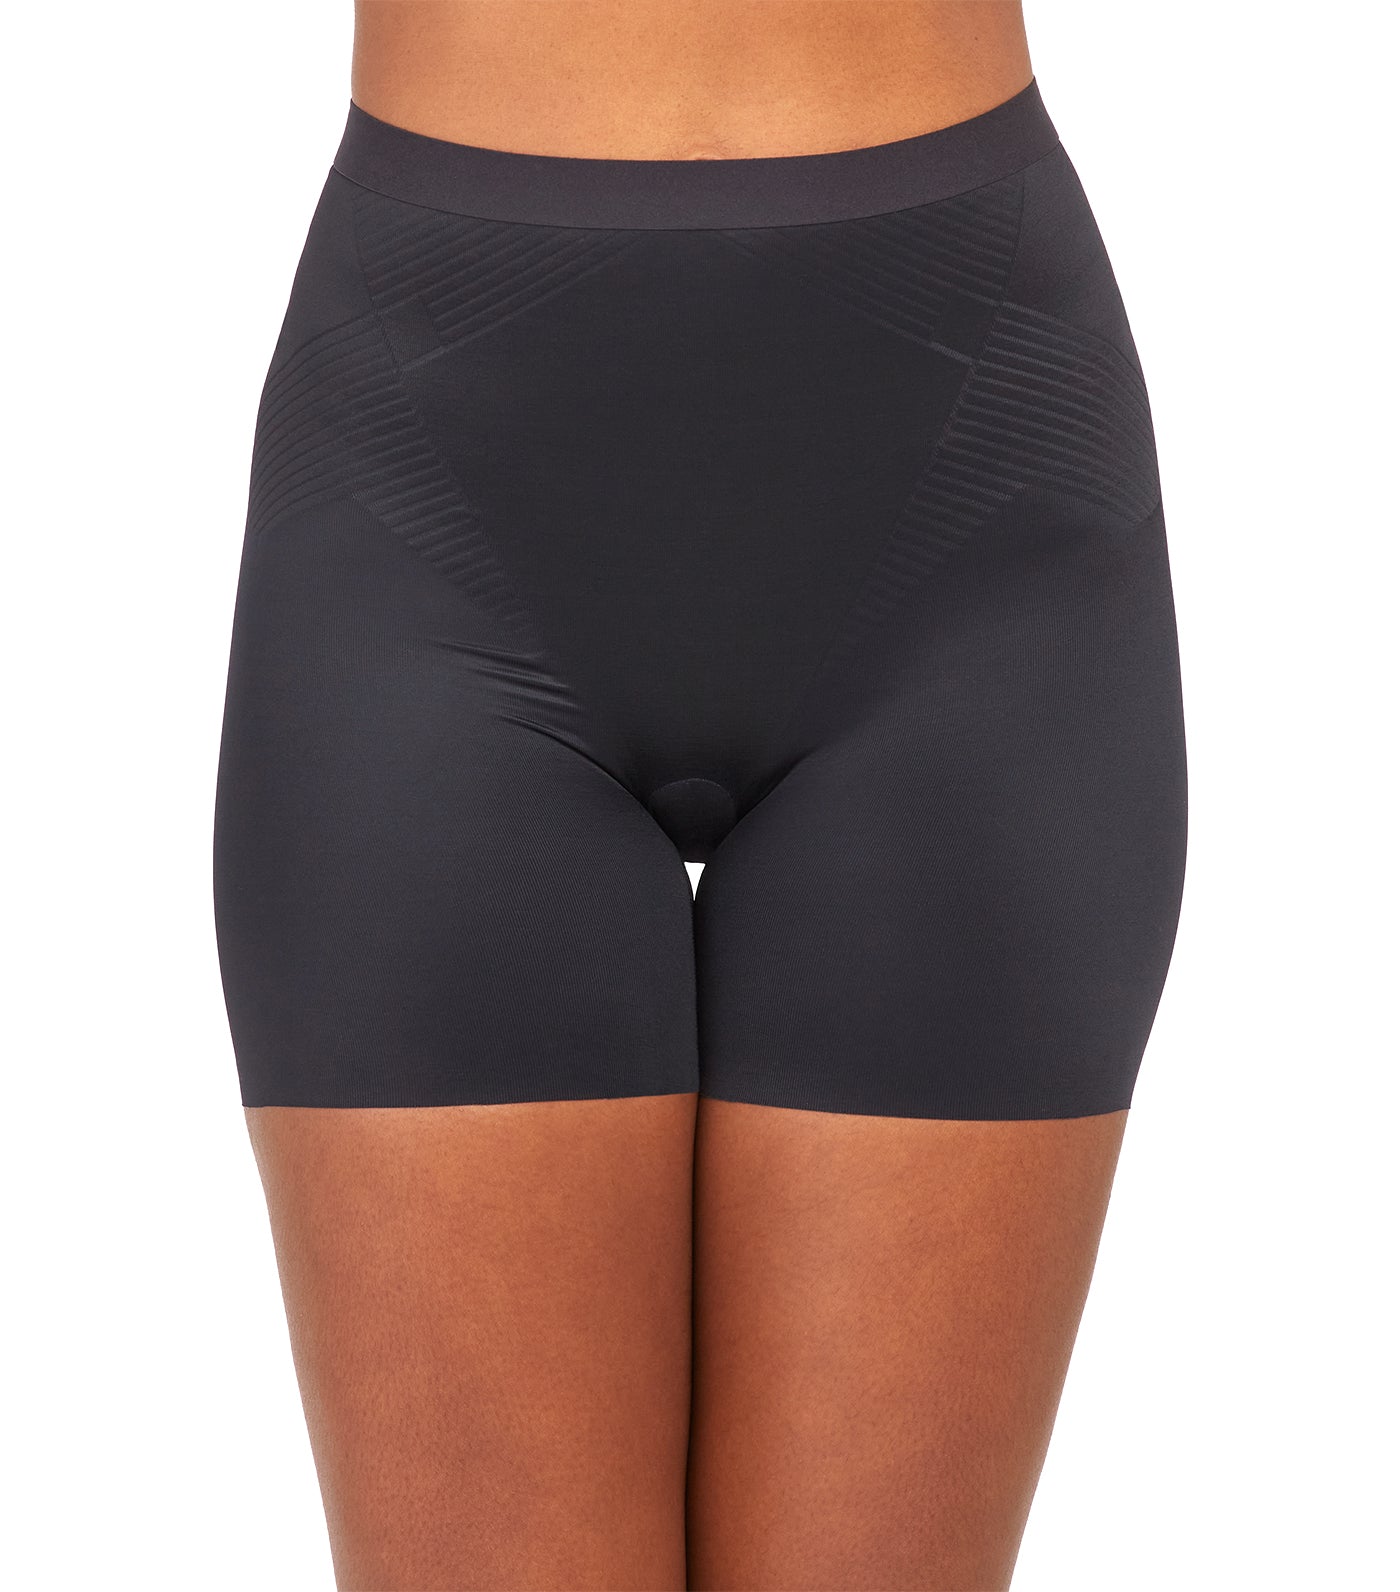 Skinny Girl Women's Black Smother & Shapewear Shorts Size Medium - $25 -  From Iryna